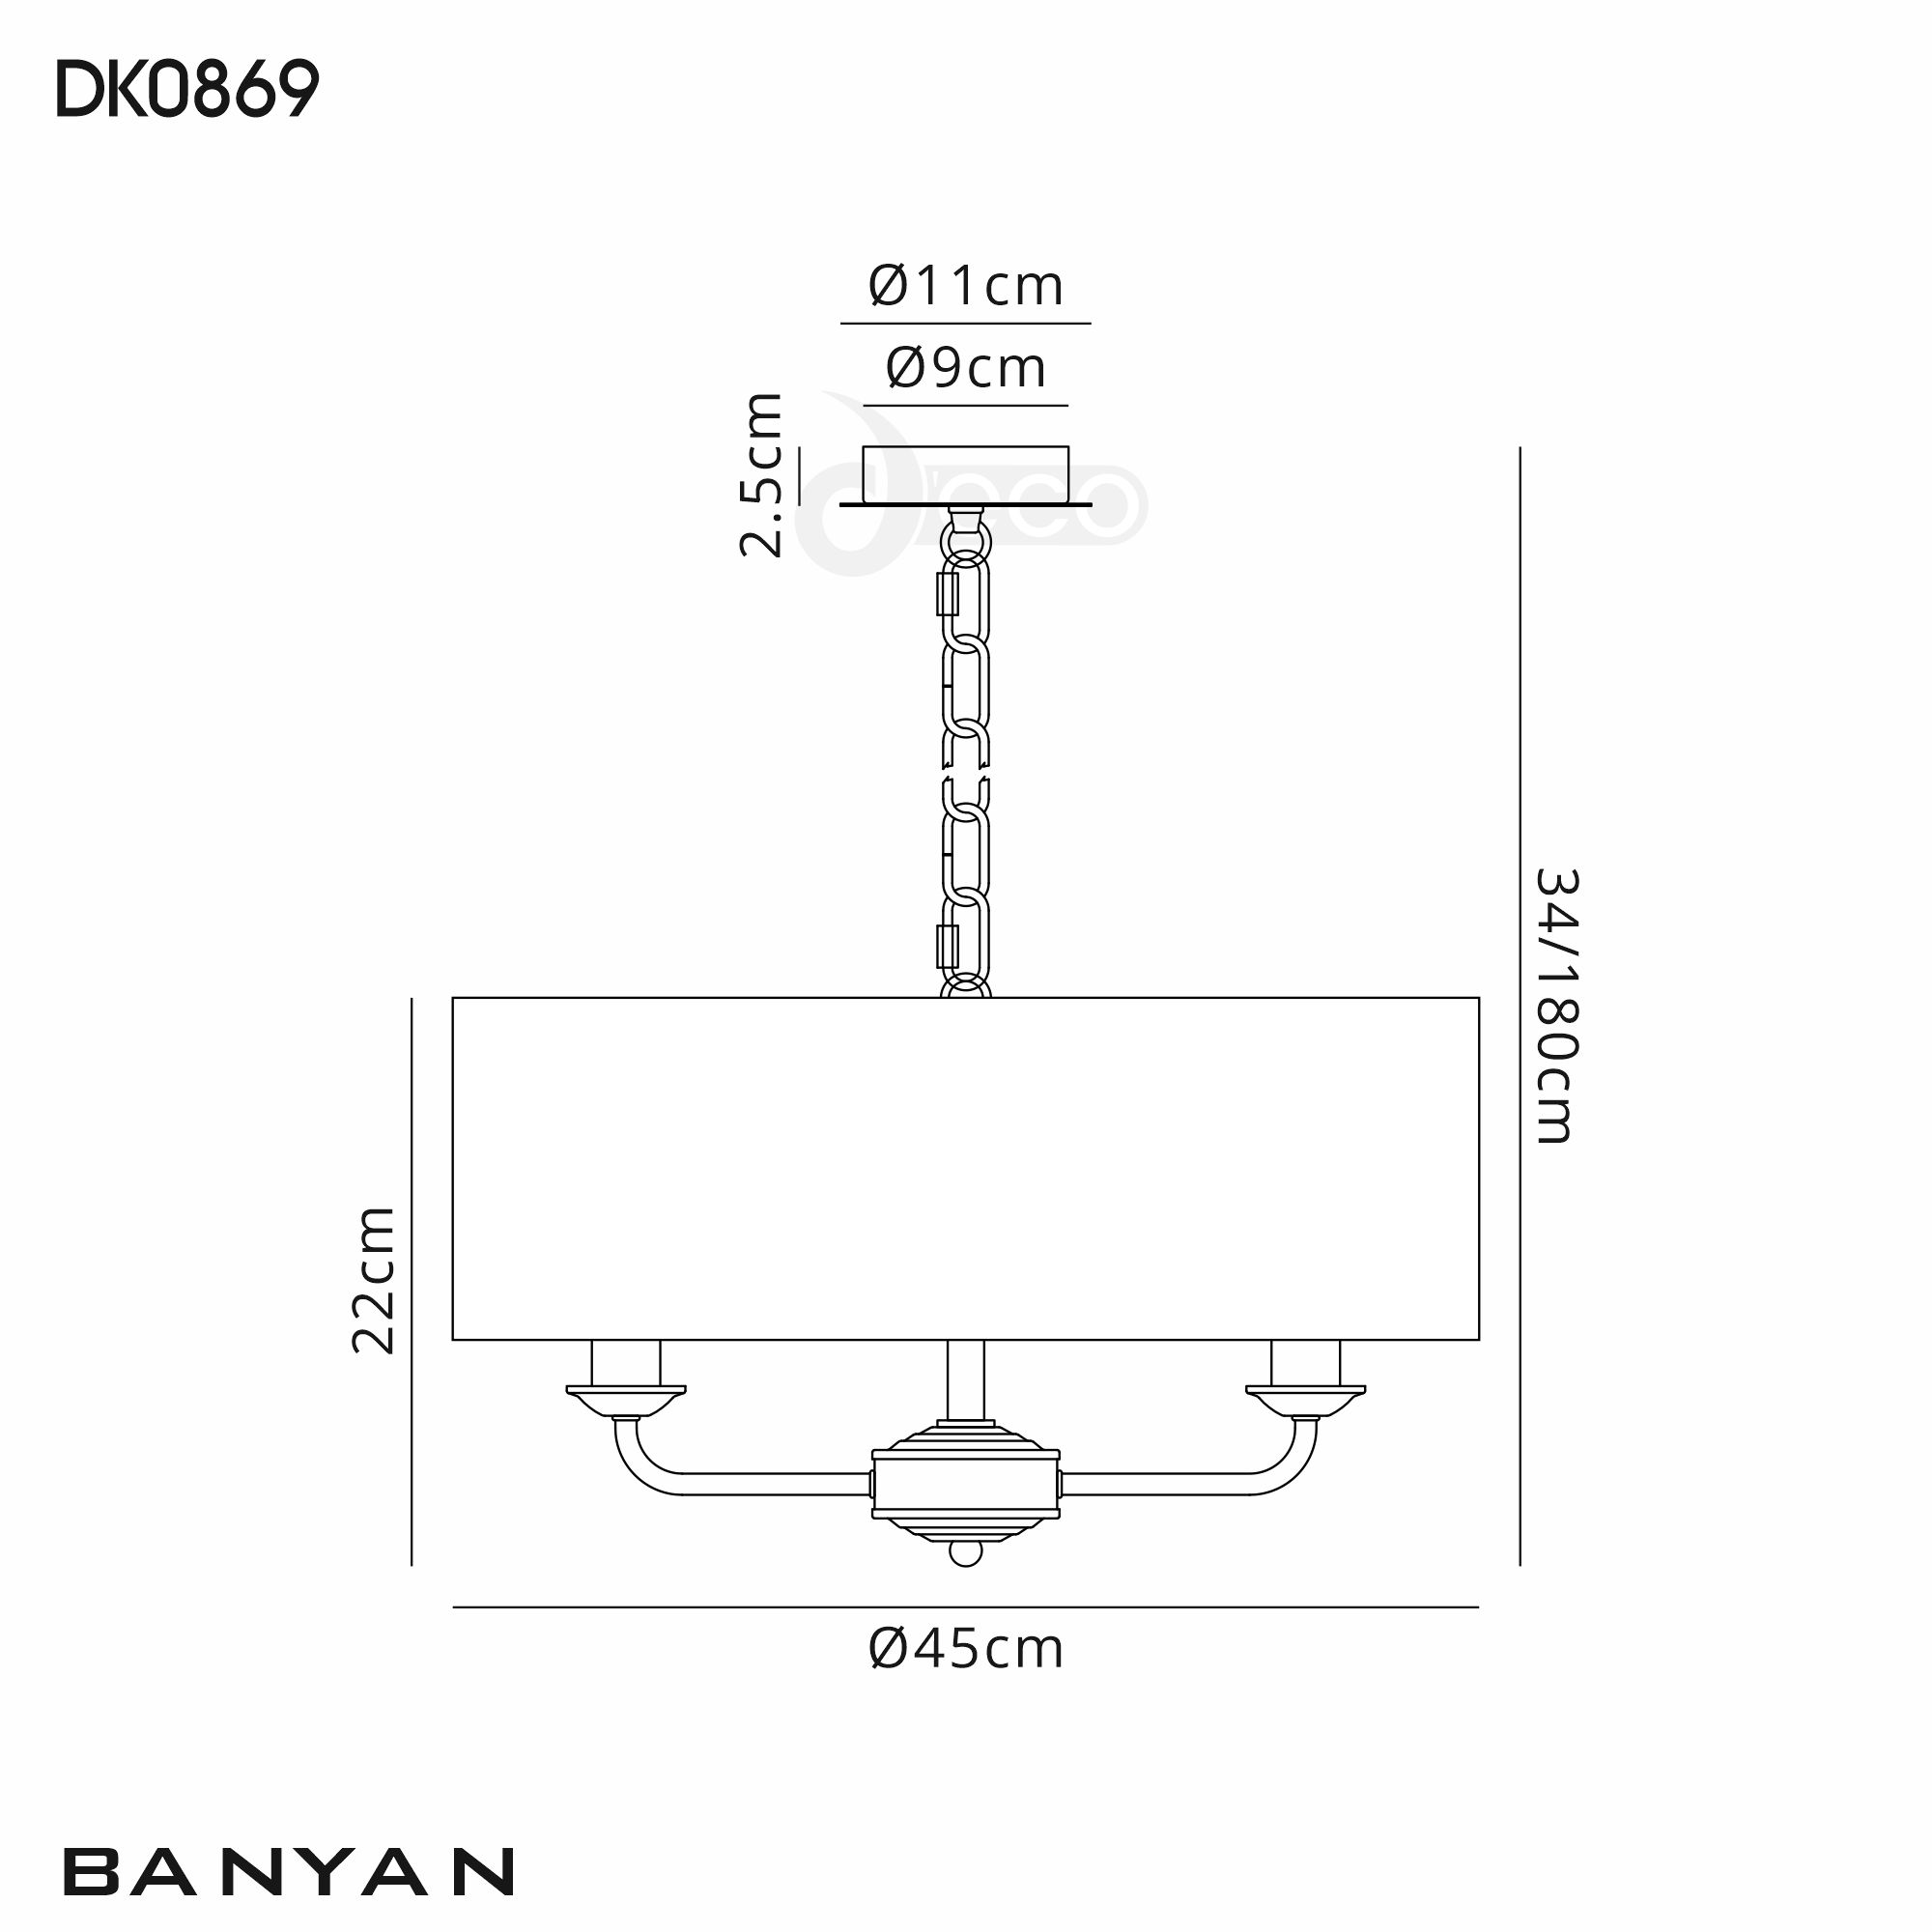 DK0869  Banyan 45cm 3 Light Pendant Antique Brass, Black